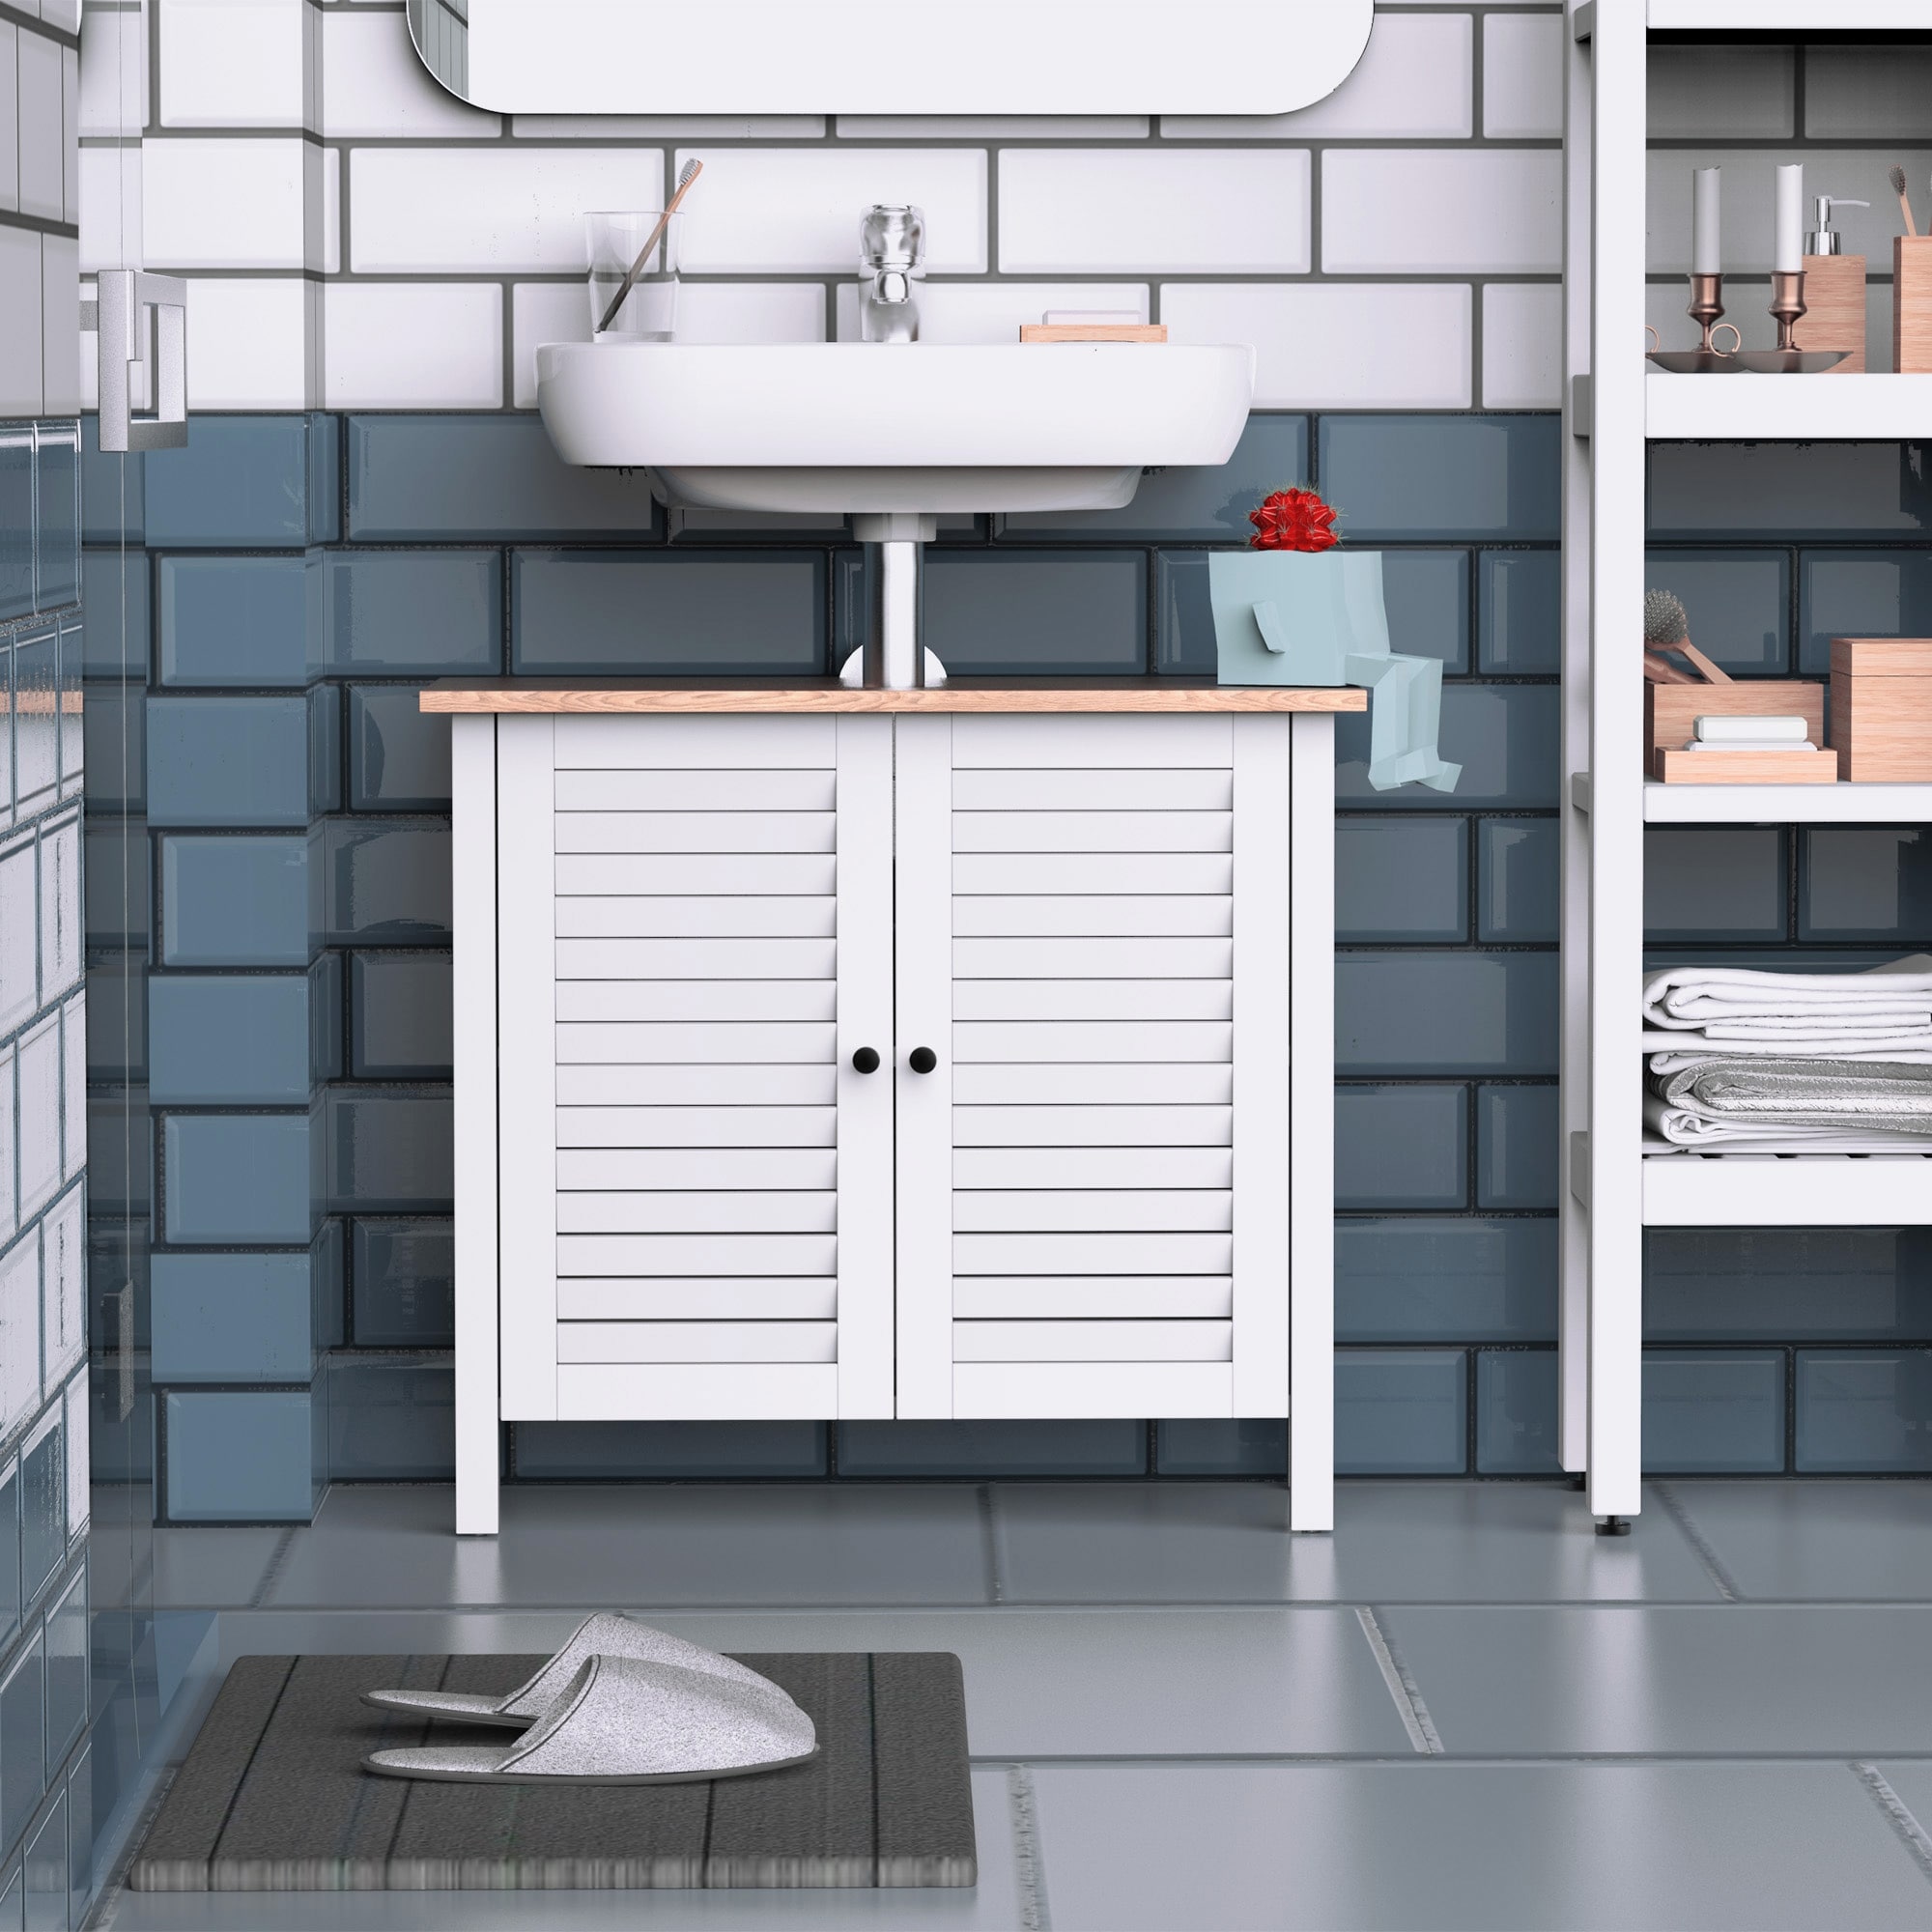 Iwell Under Sink Storage Cabinet with 2 Doors and Shelf, Pedestal Sink  Bathroom Vanity Cabinet, Space Saver Organizer, White